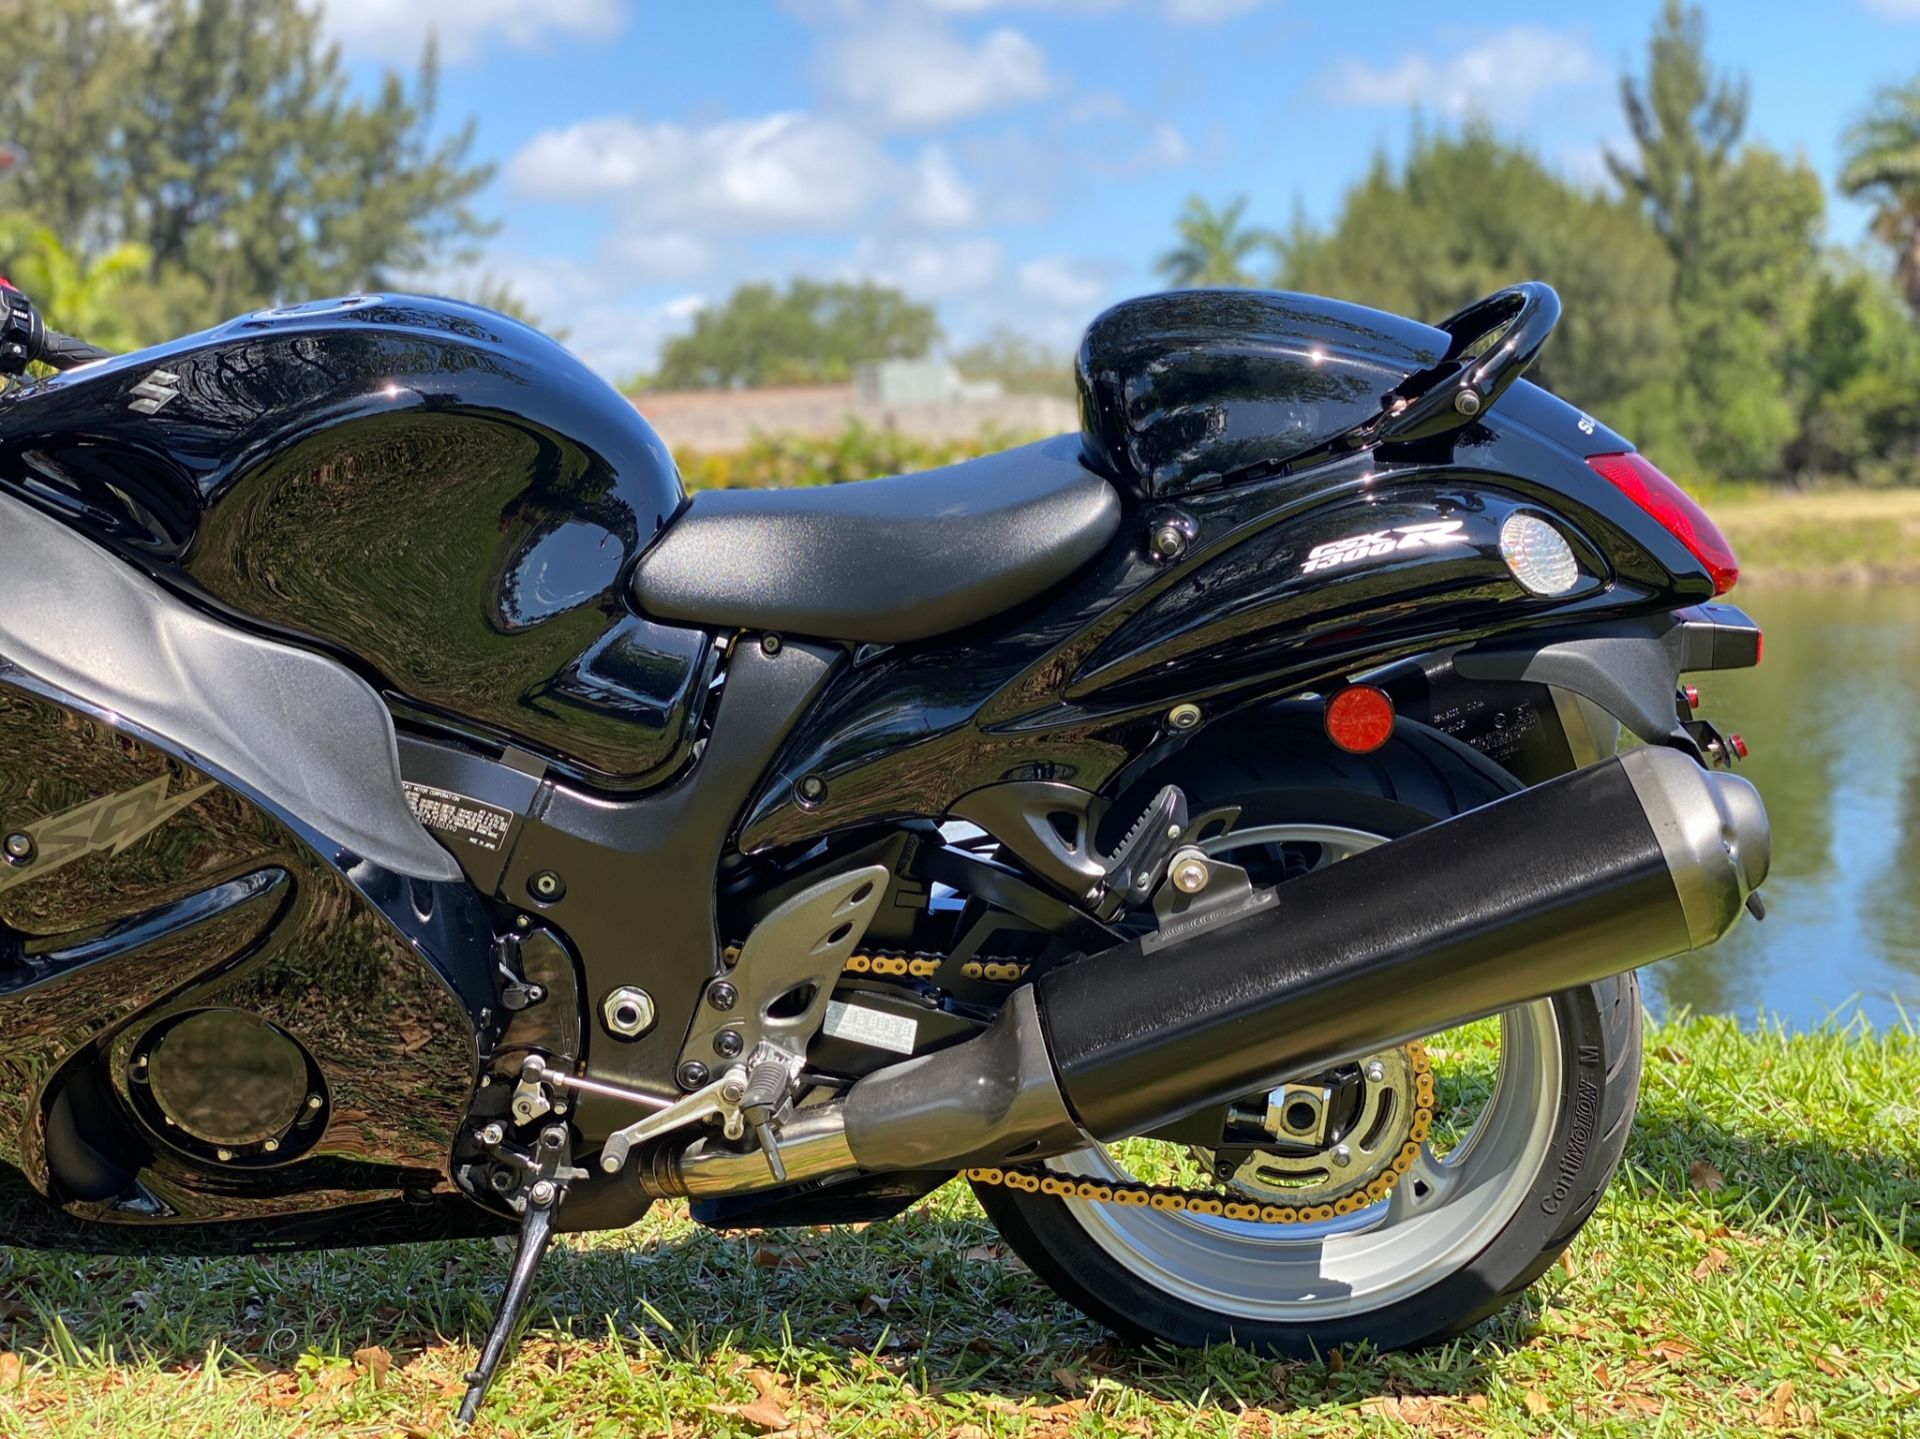 2019 Suzuki Hayabusa in North Miami Beach, Florida - Photo 18